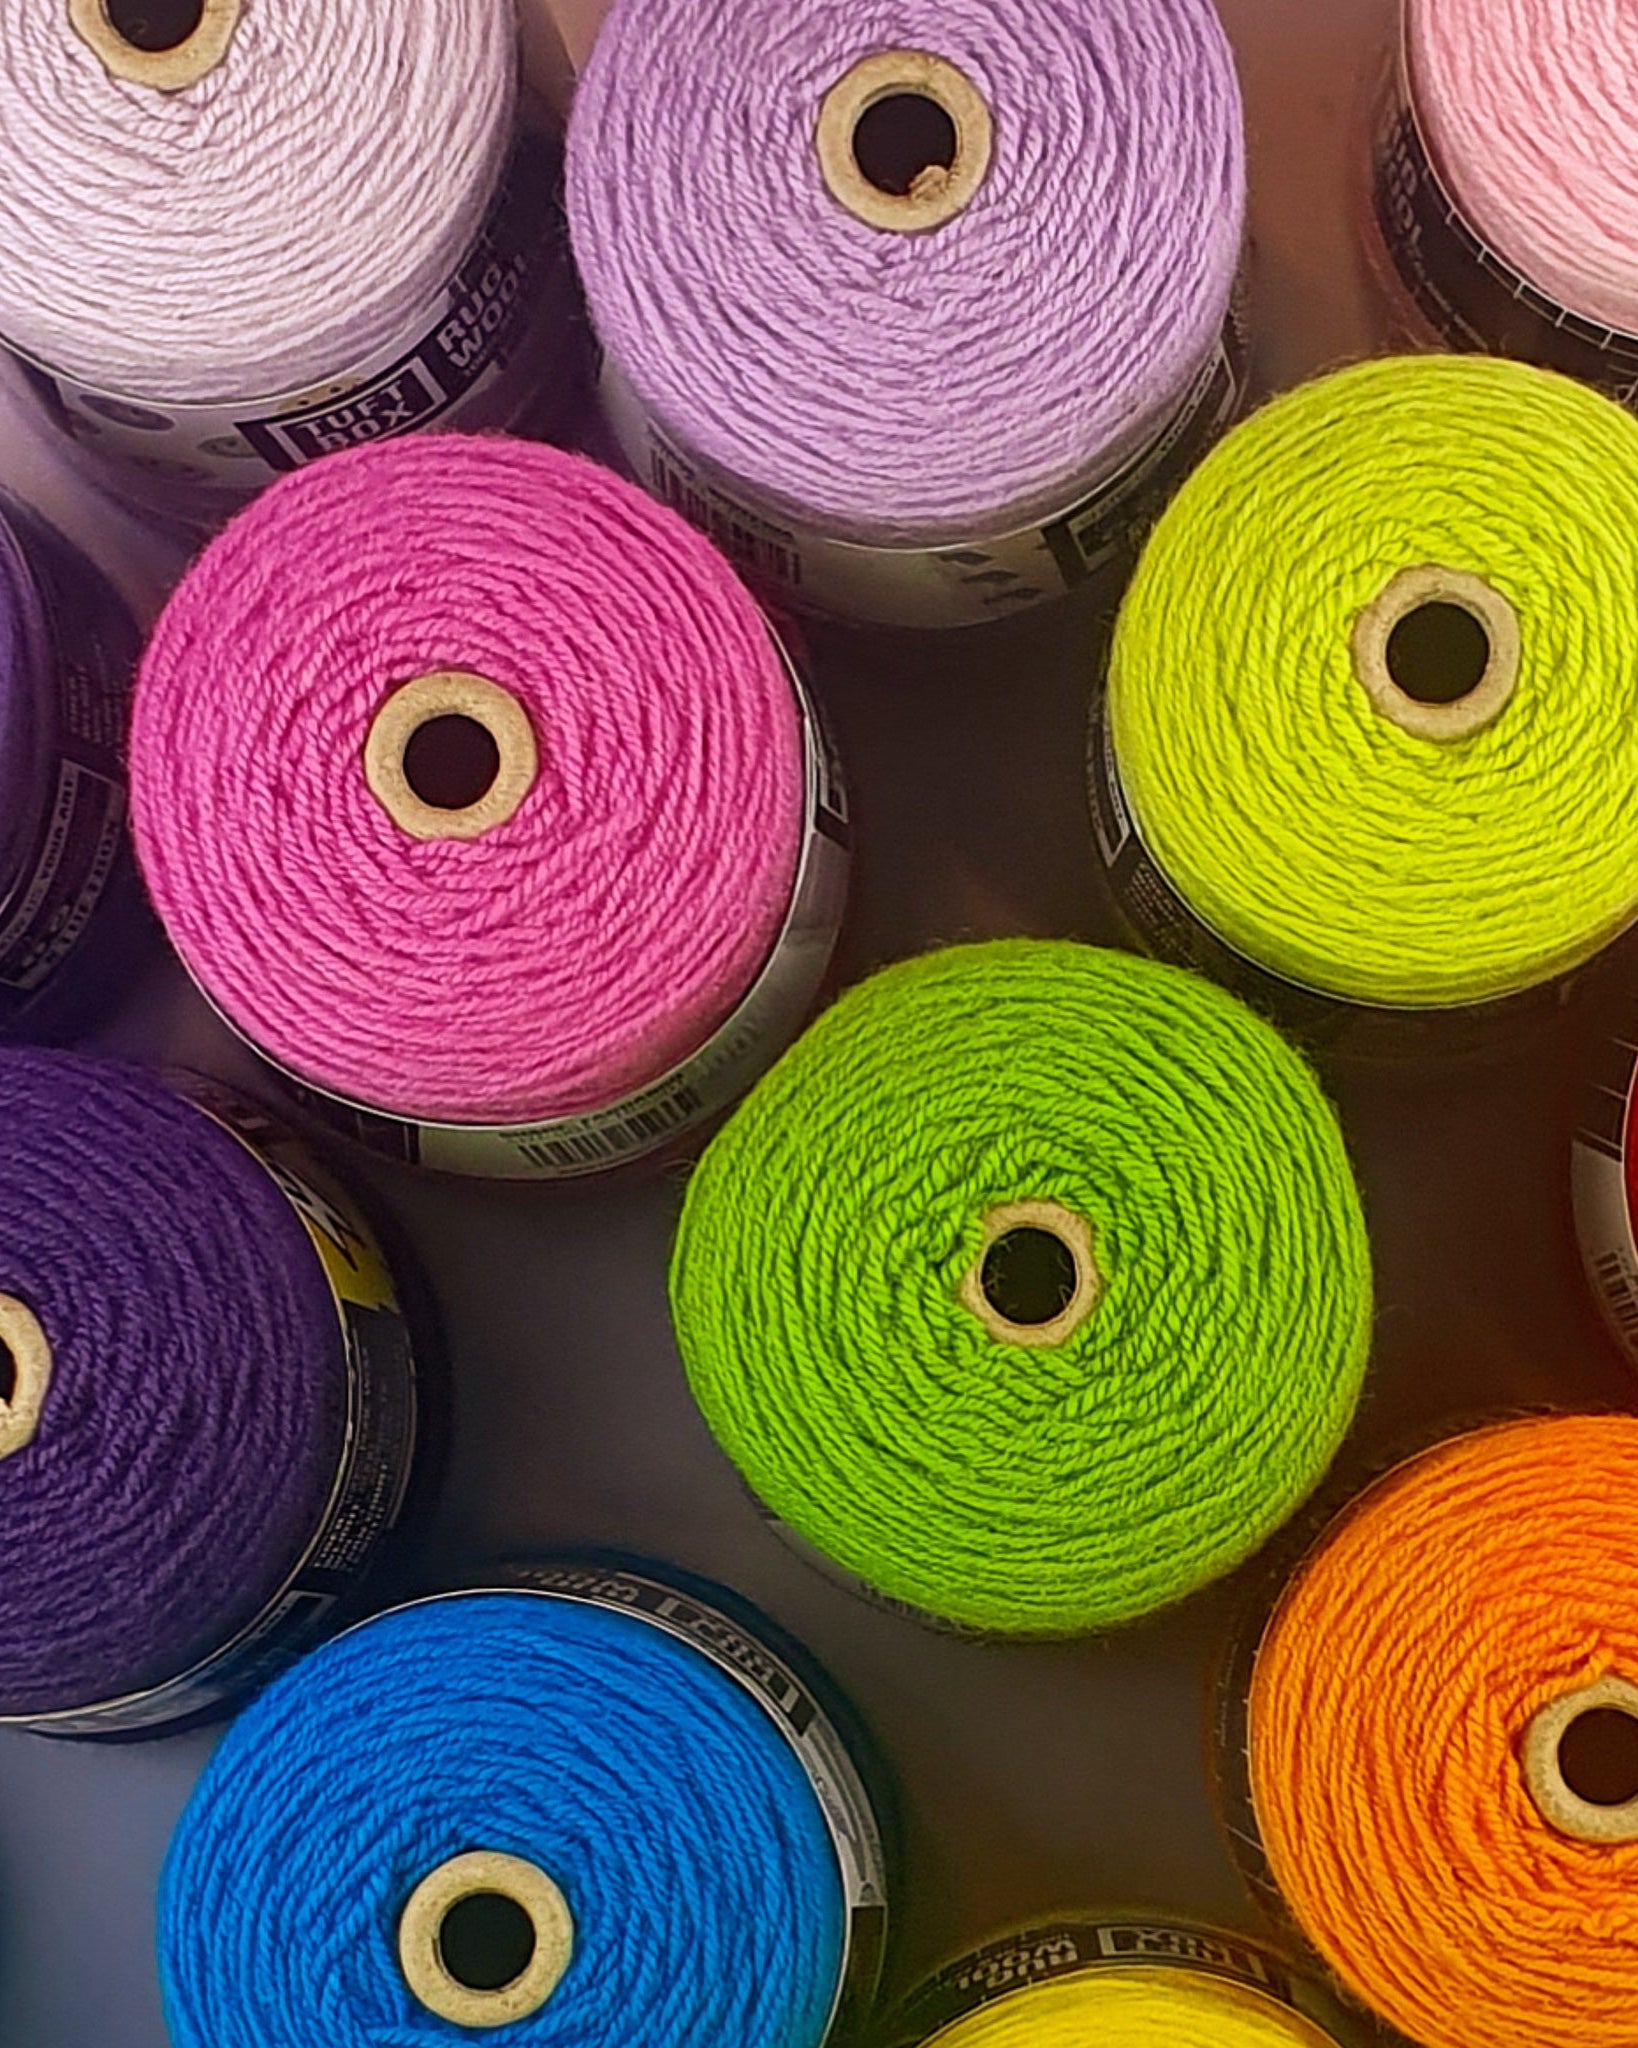 Colourful cones of rug tufting yarn